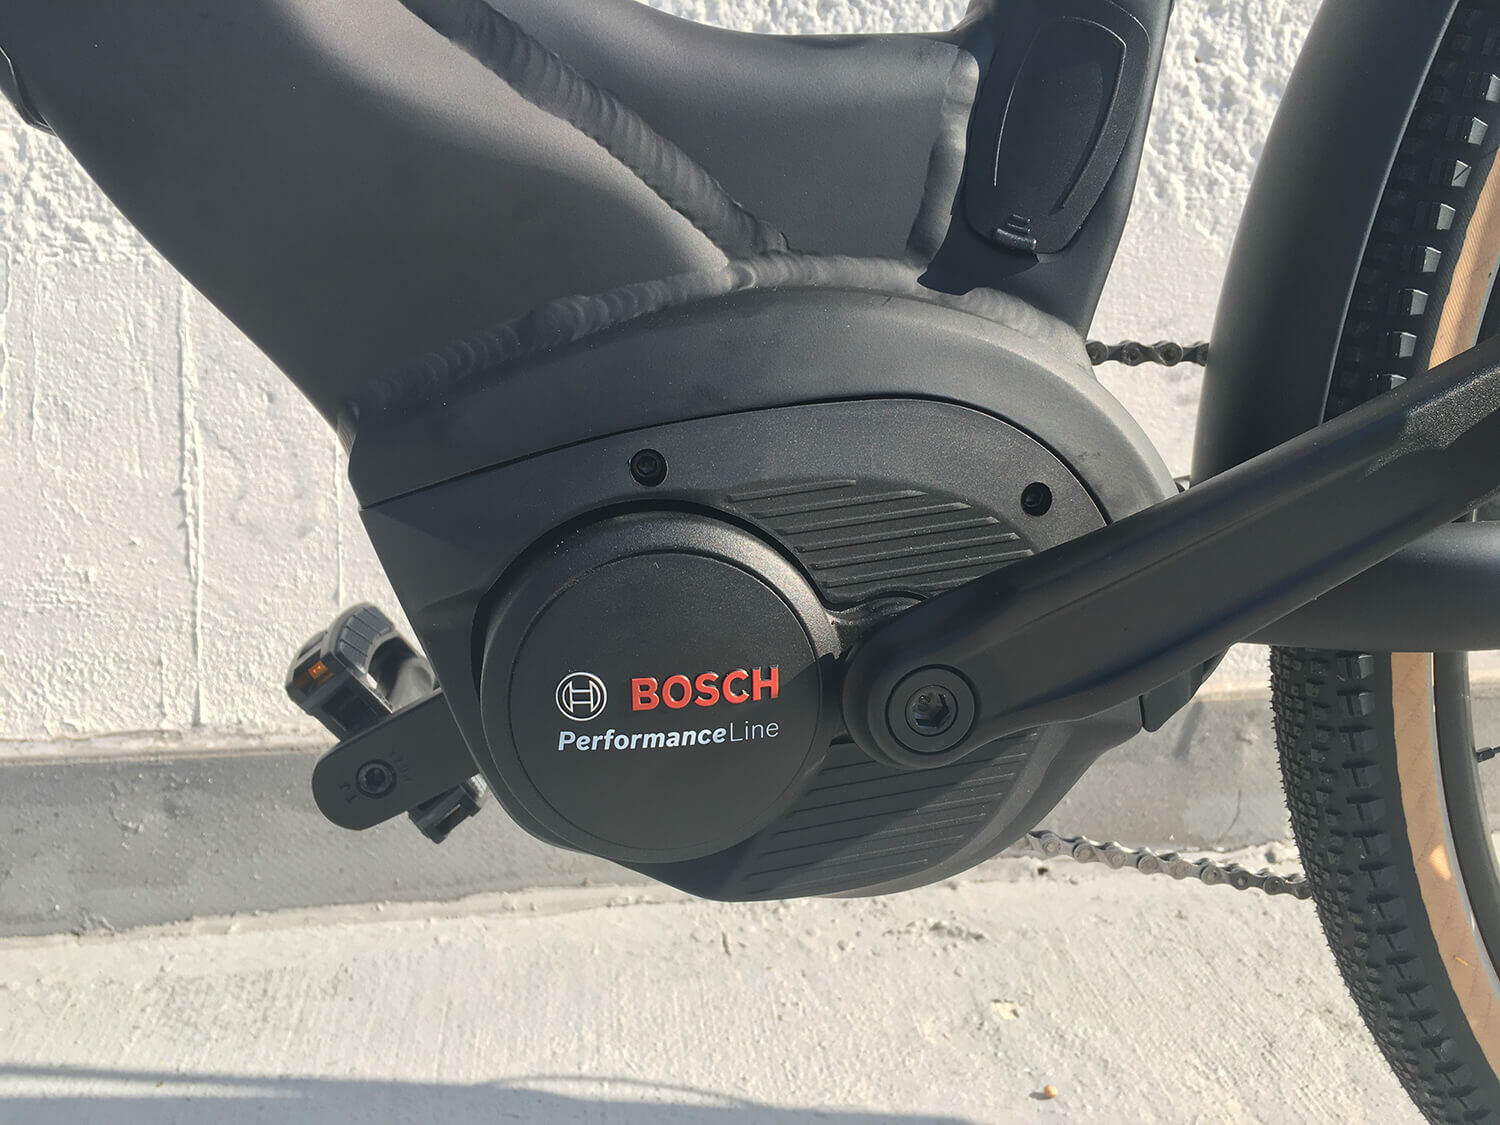 ROCK MACHINE CrossRide INT e500 Bosch touring